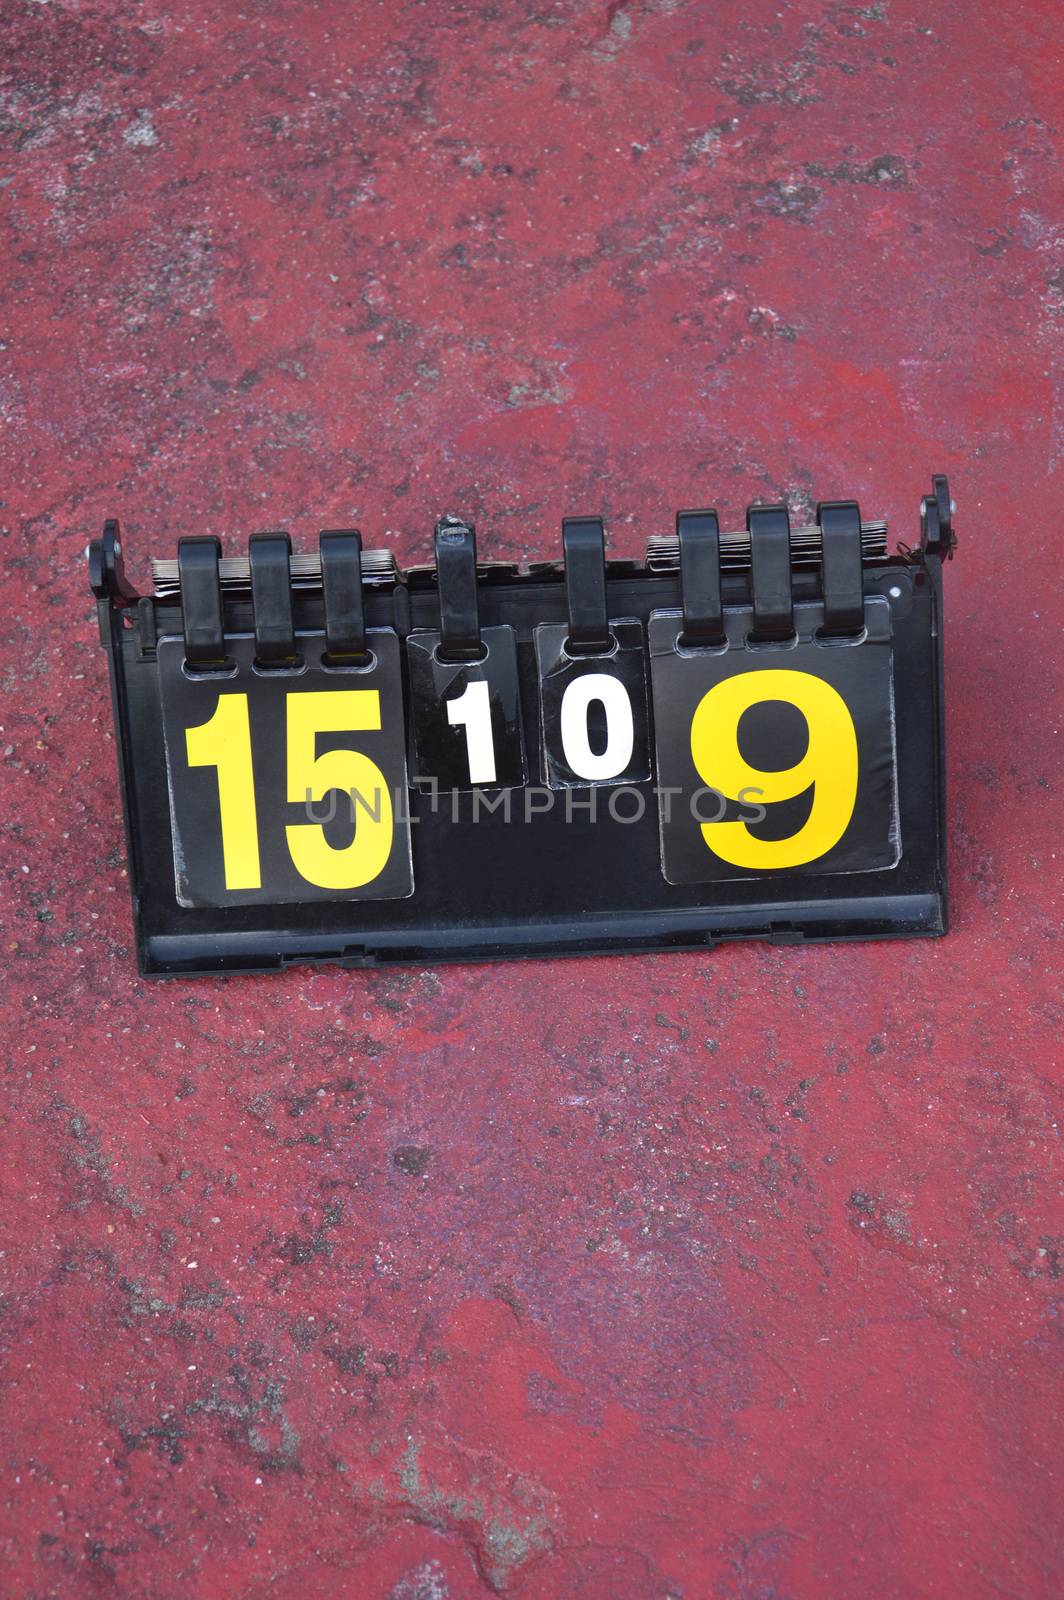 volleyball scoreboard by antonihalim